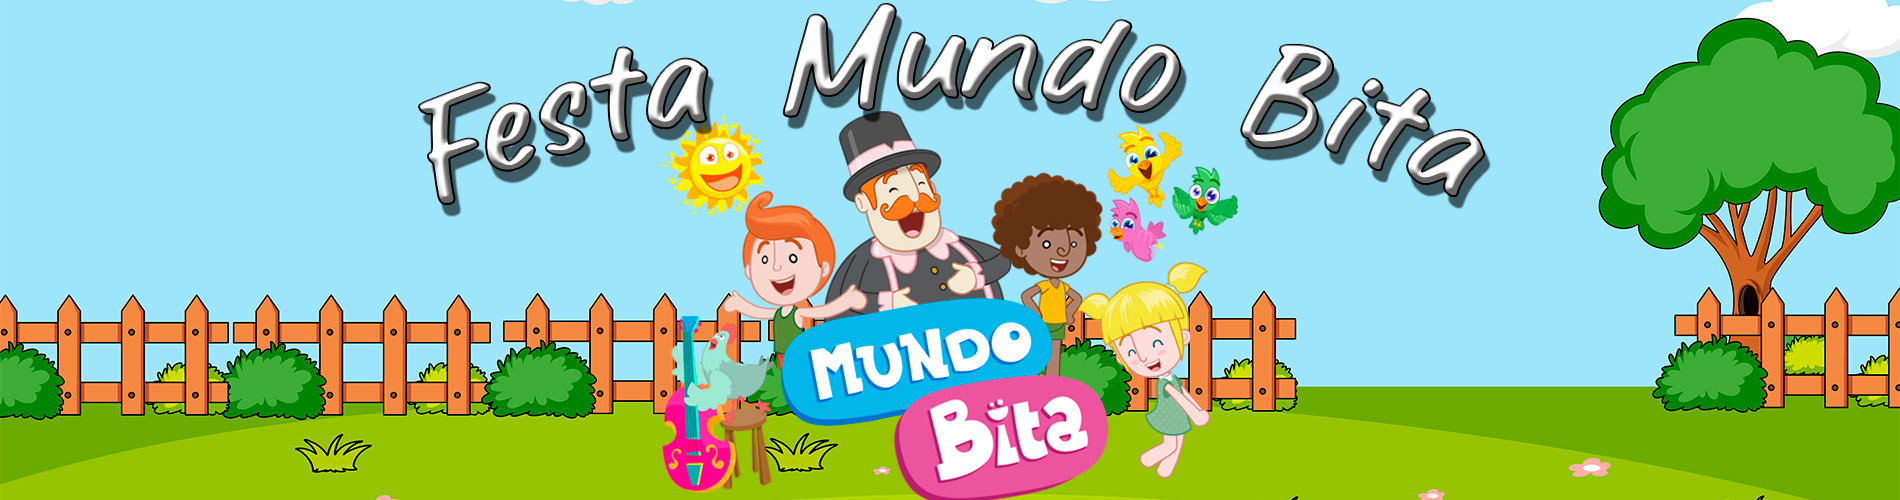 Banner Mundo Bita - Desktop